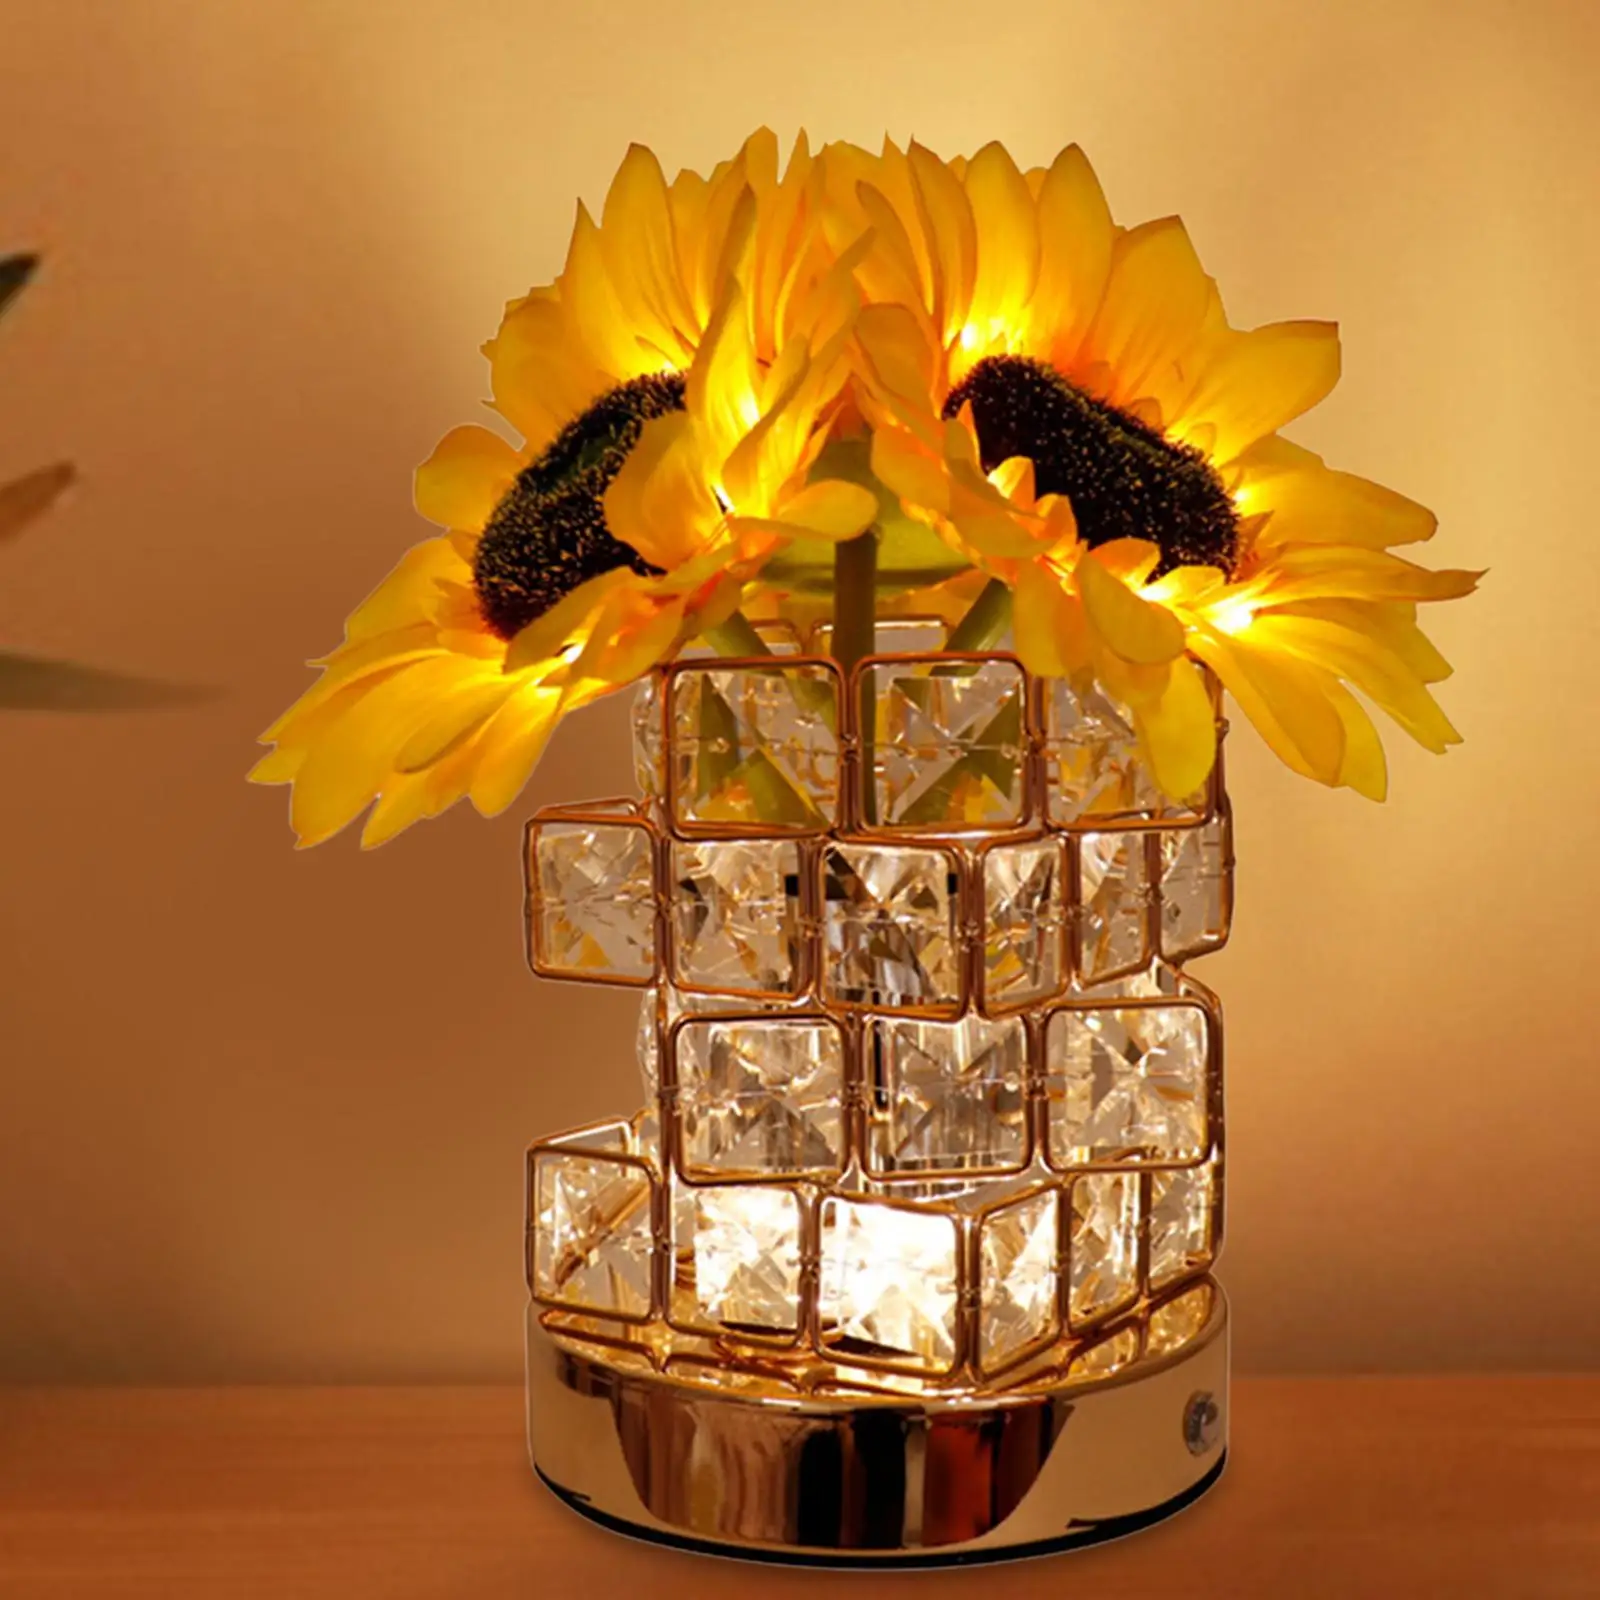 Artificial Flower Lamp LED Nightlight Modern Sunflowers Bedside Table Lamp